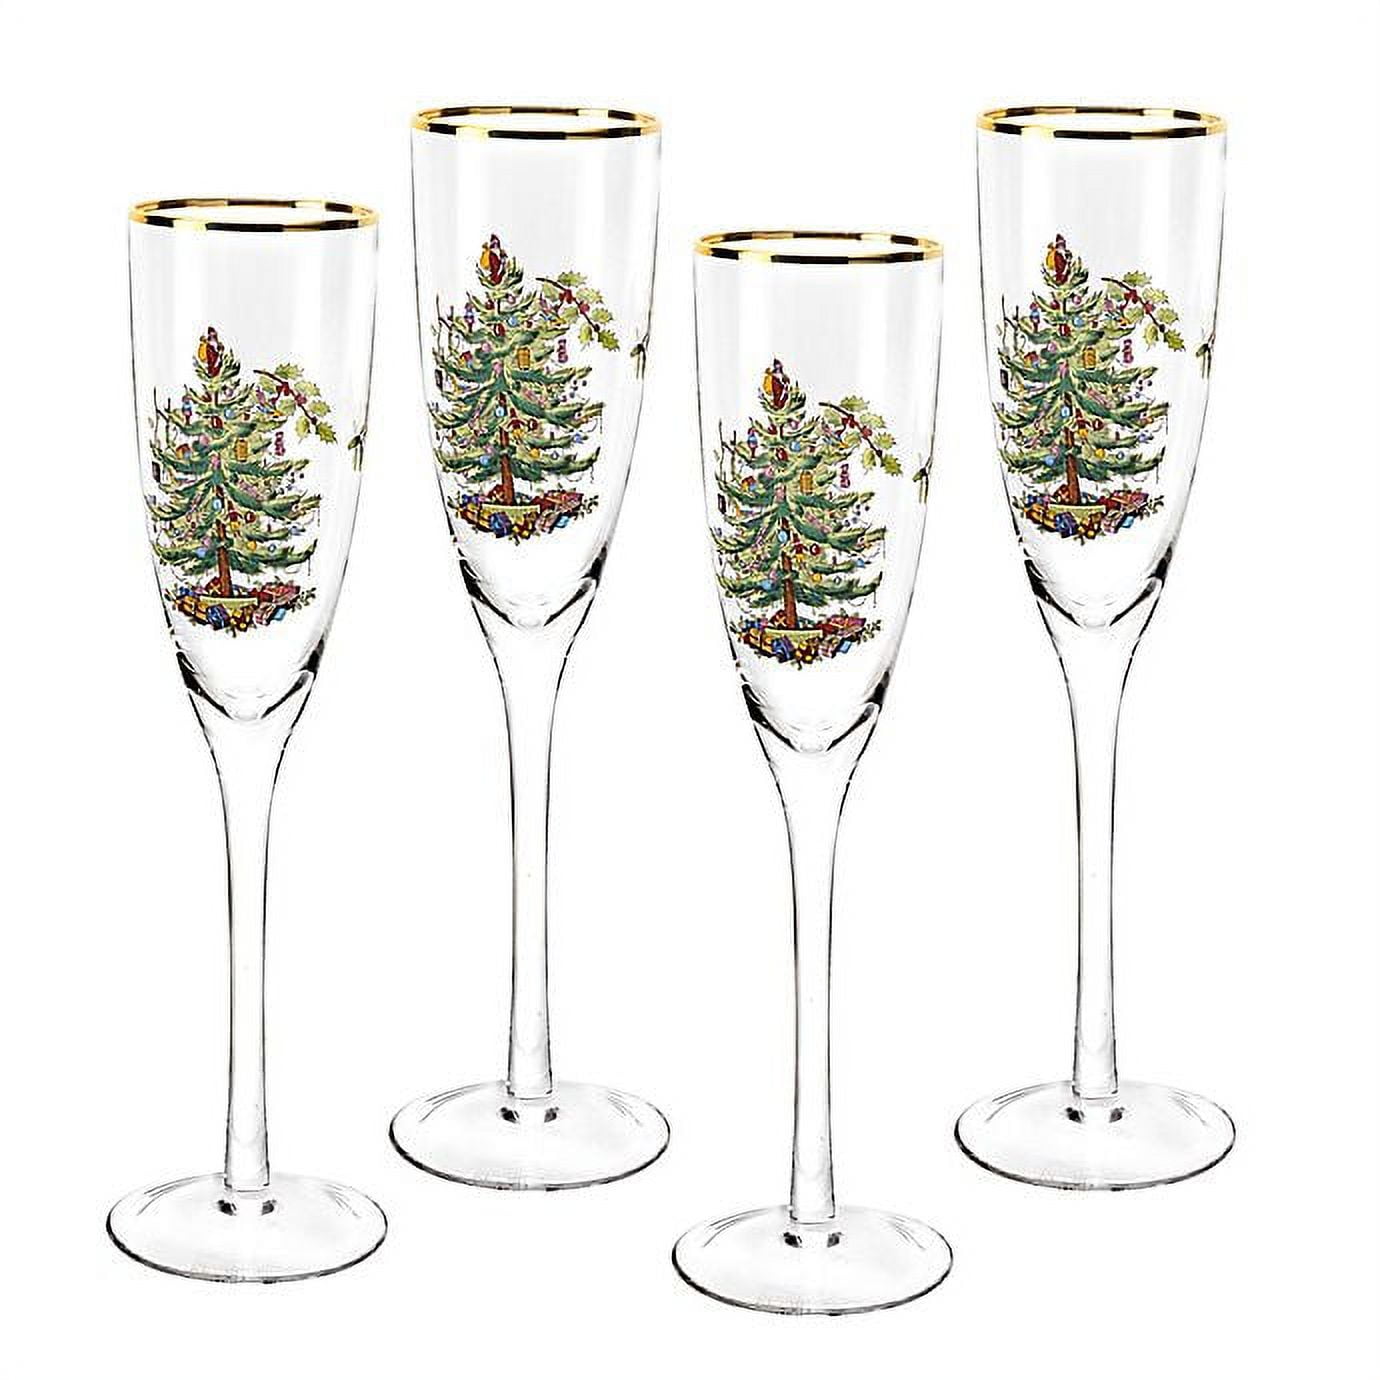 Spode Christmas Tree Champagne Flutes, Set Of 4 - 8.45 Oz. : Target